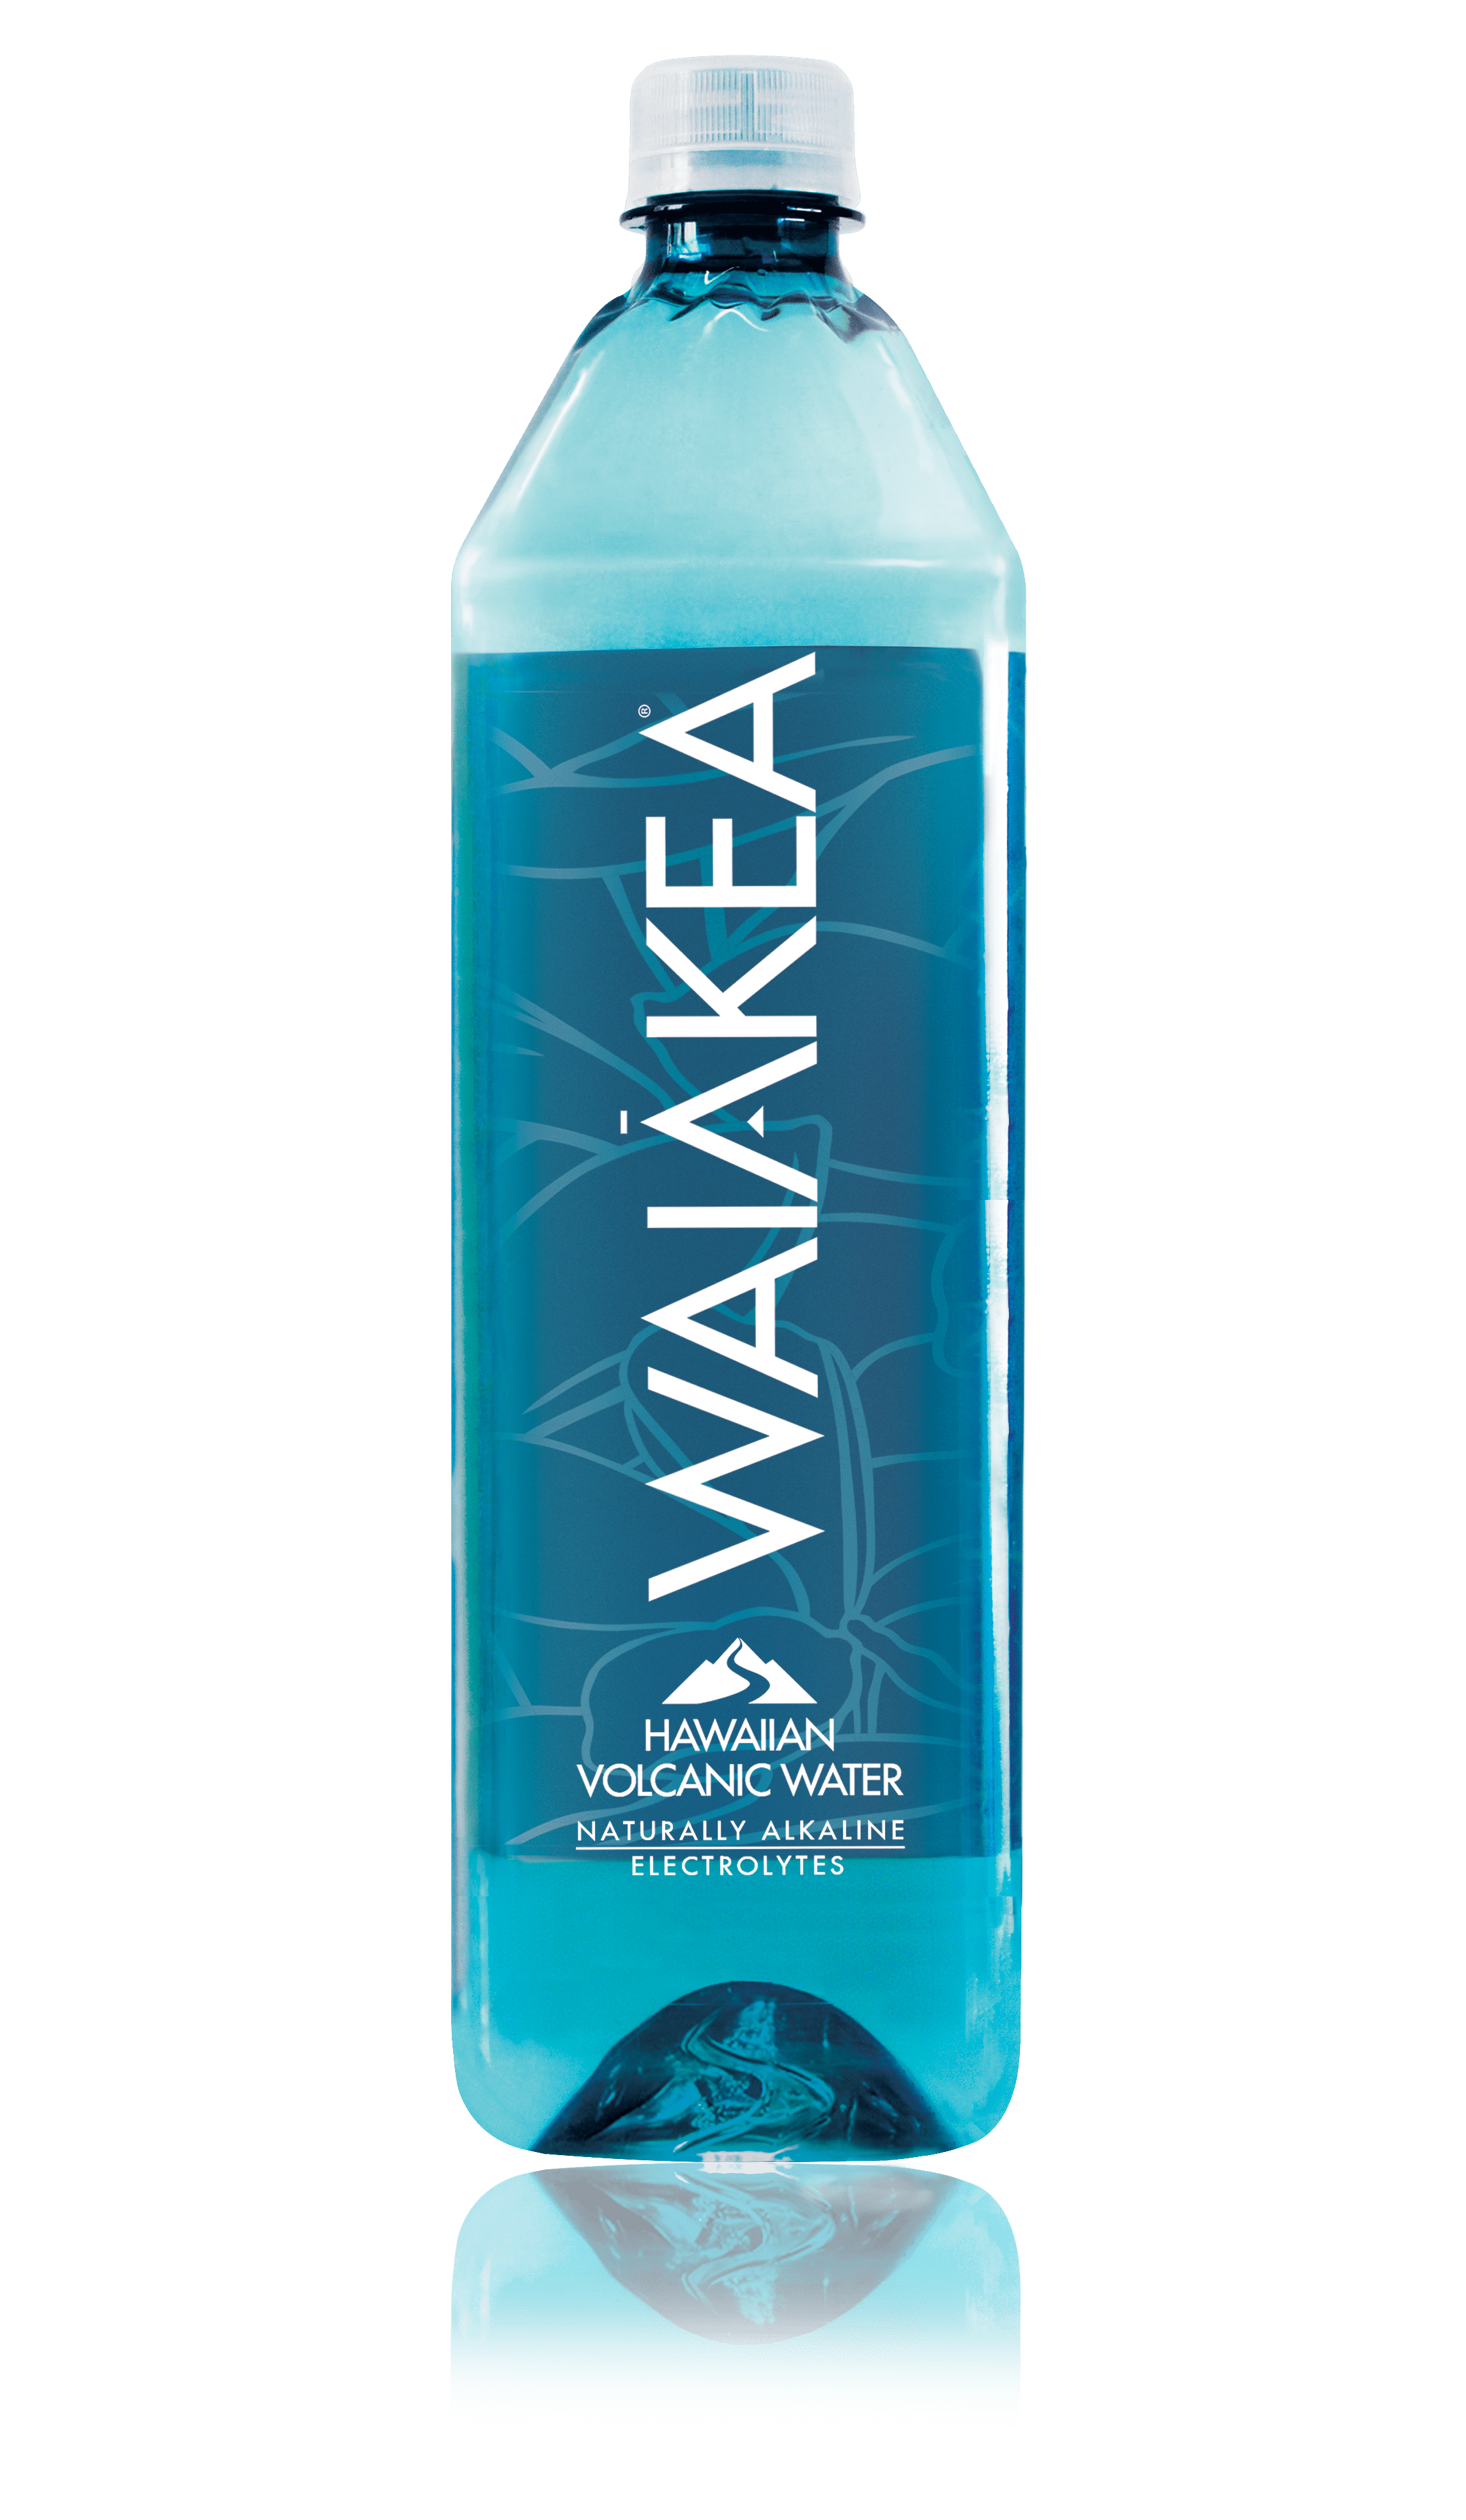 Waiakea Premium Bottled Naturally Alkaline Hawaiian Volcanic Water 12 units per case 0.4 gal